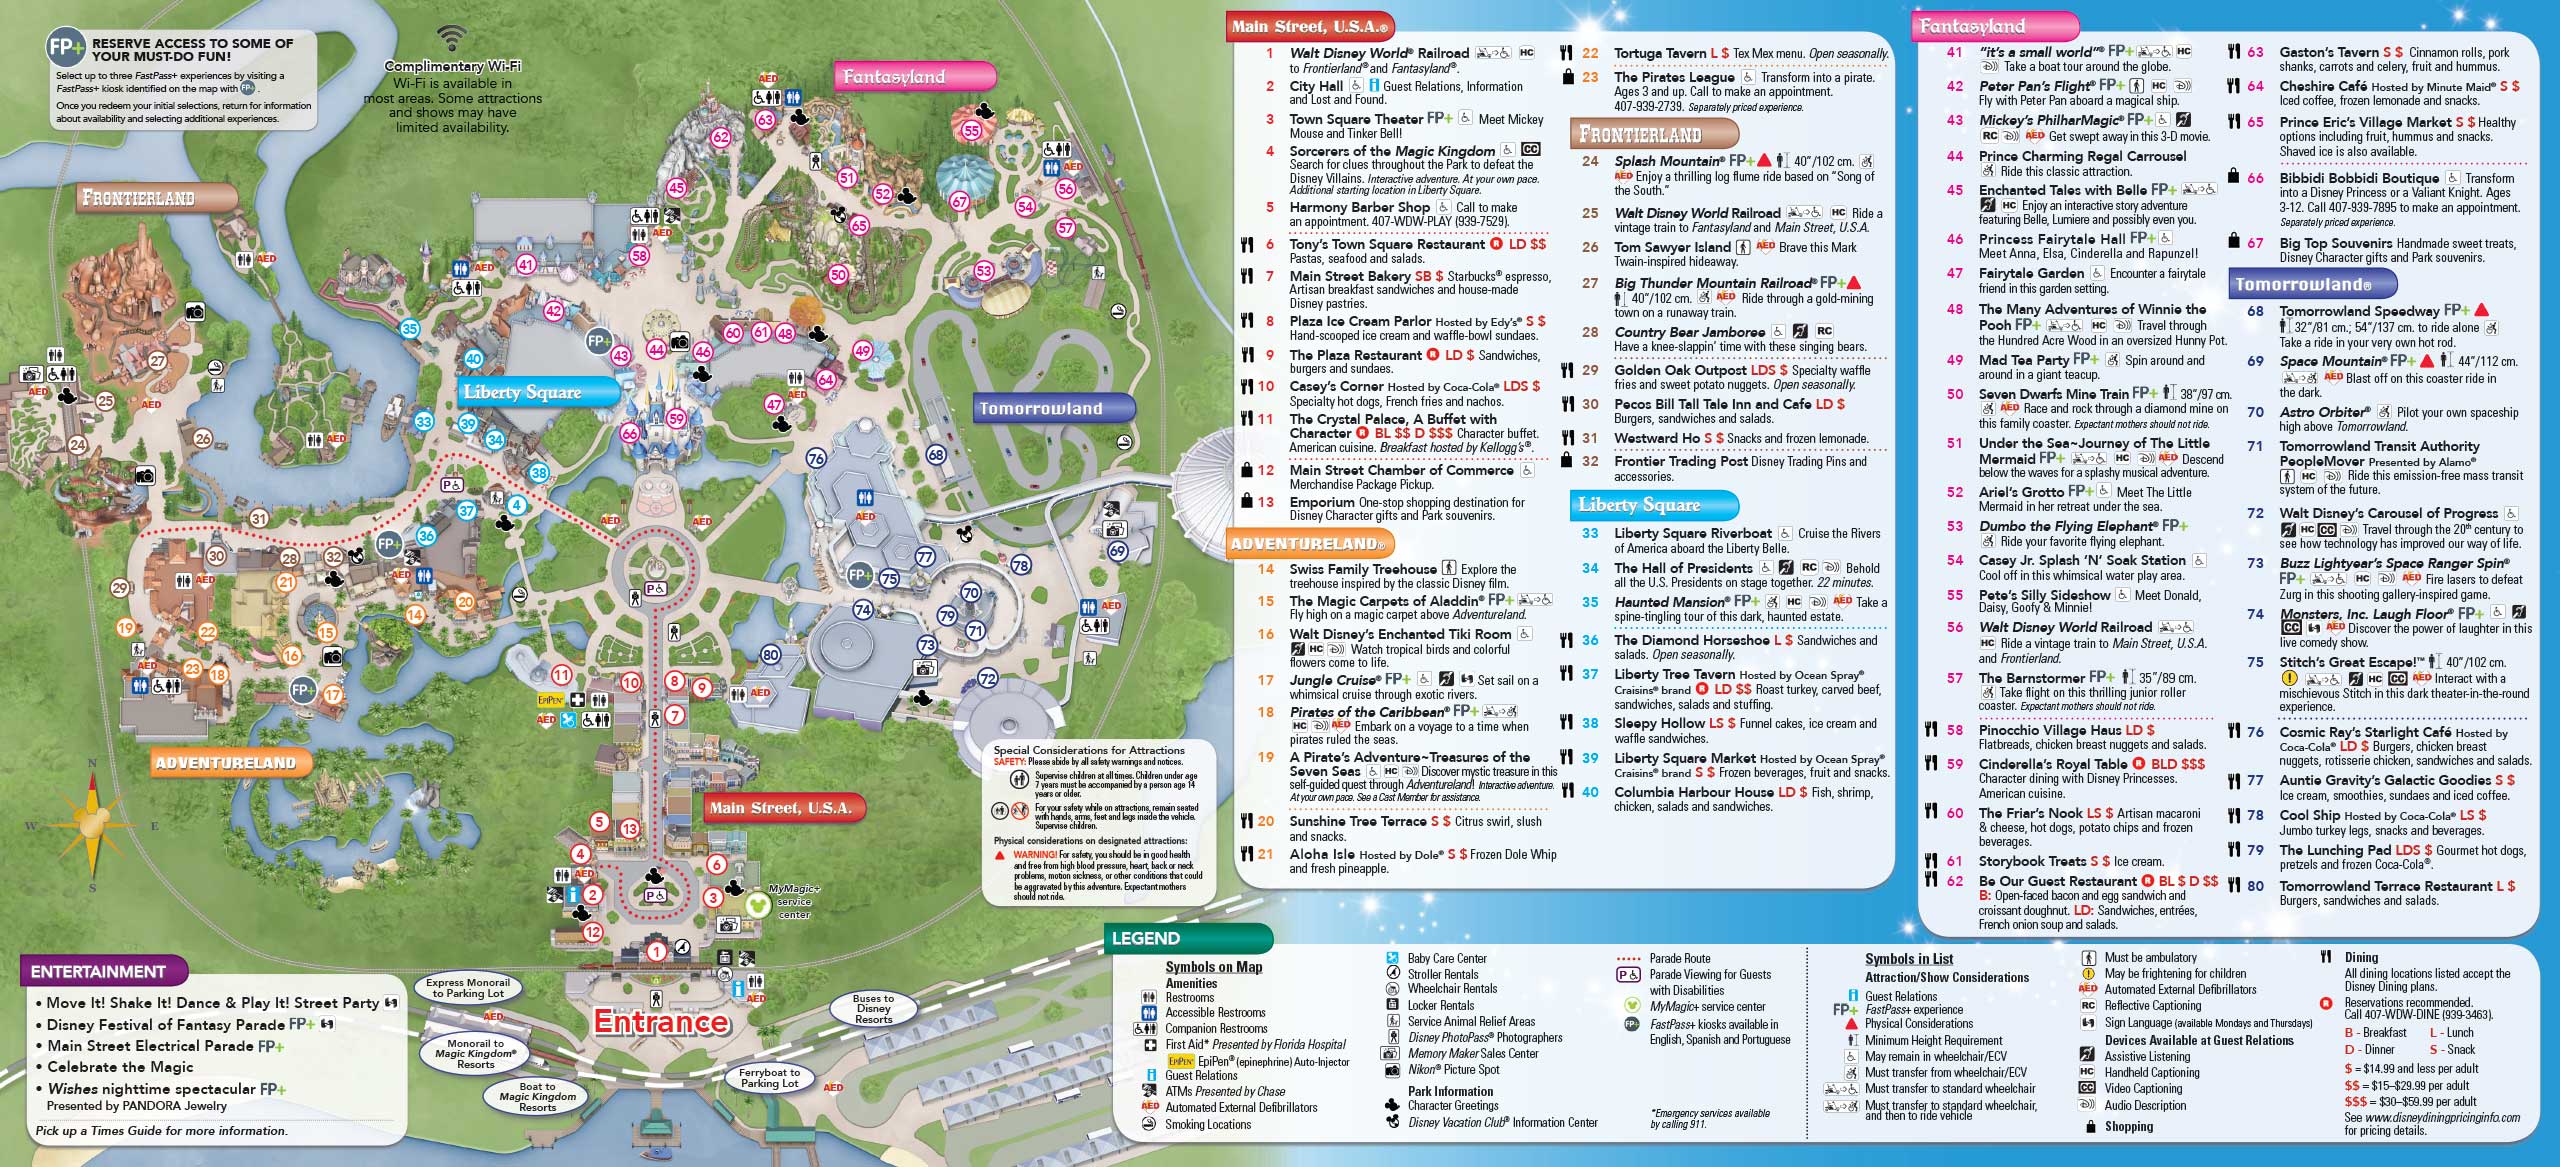 How do you find a map of Walt Disney World Resort?